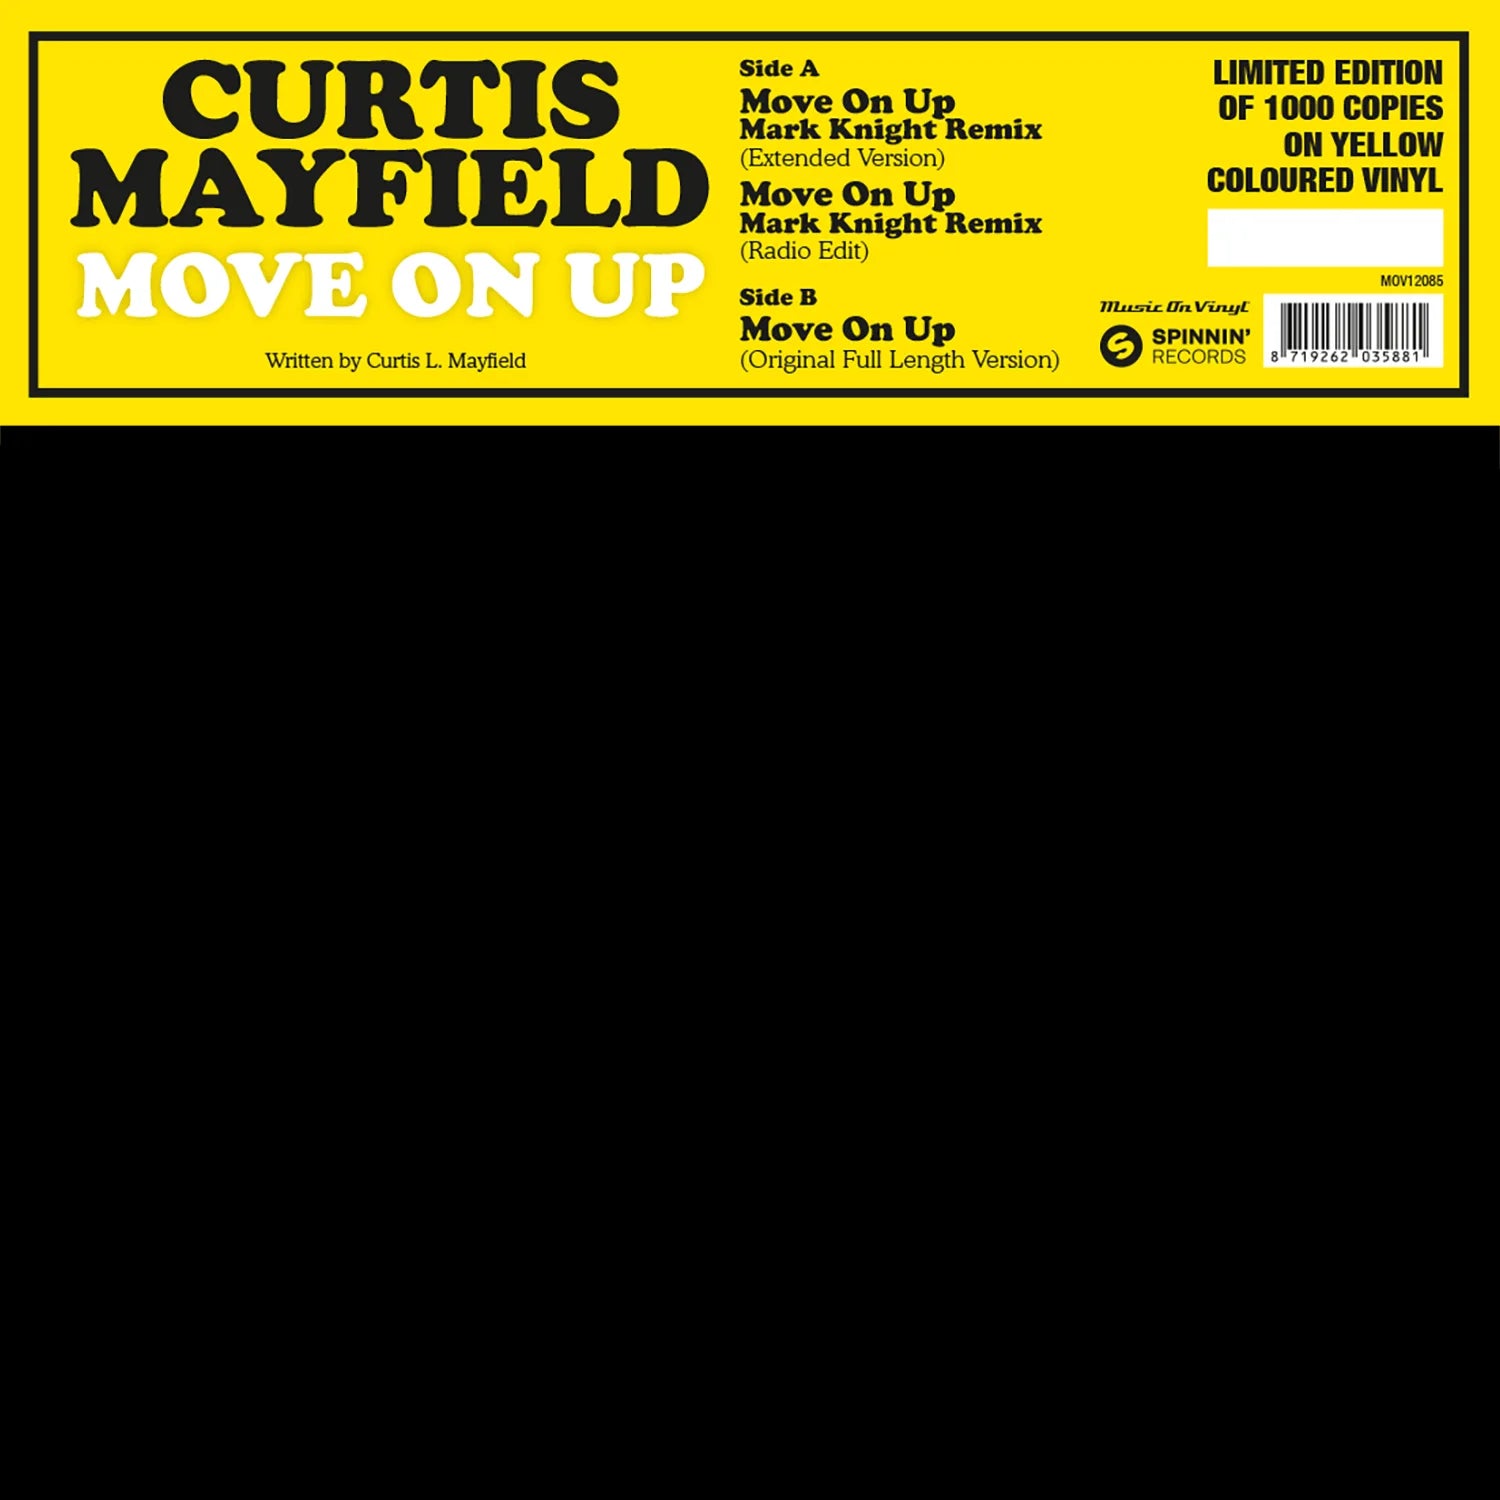 Move On Up (Mark Knight Remix)